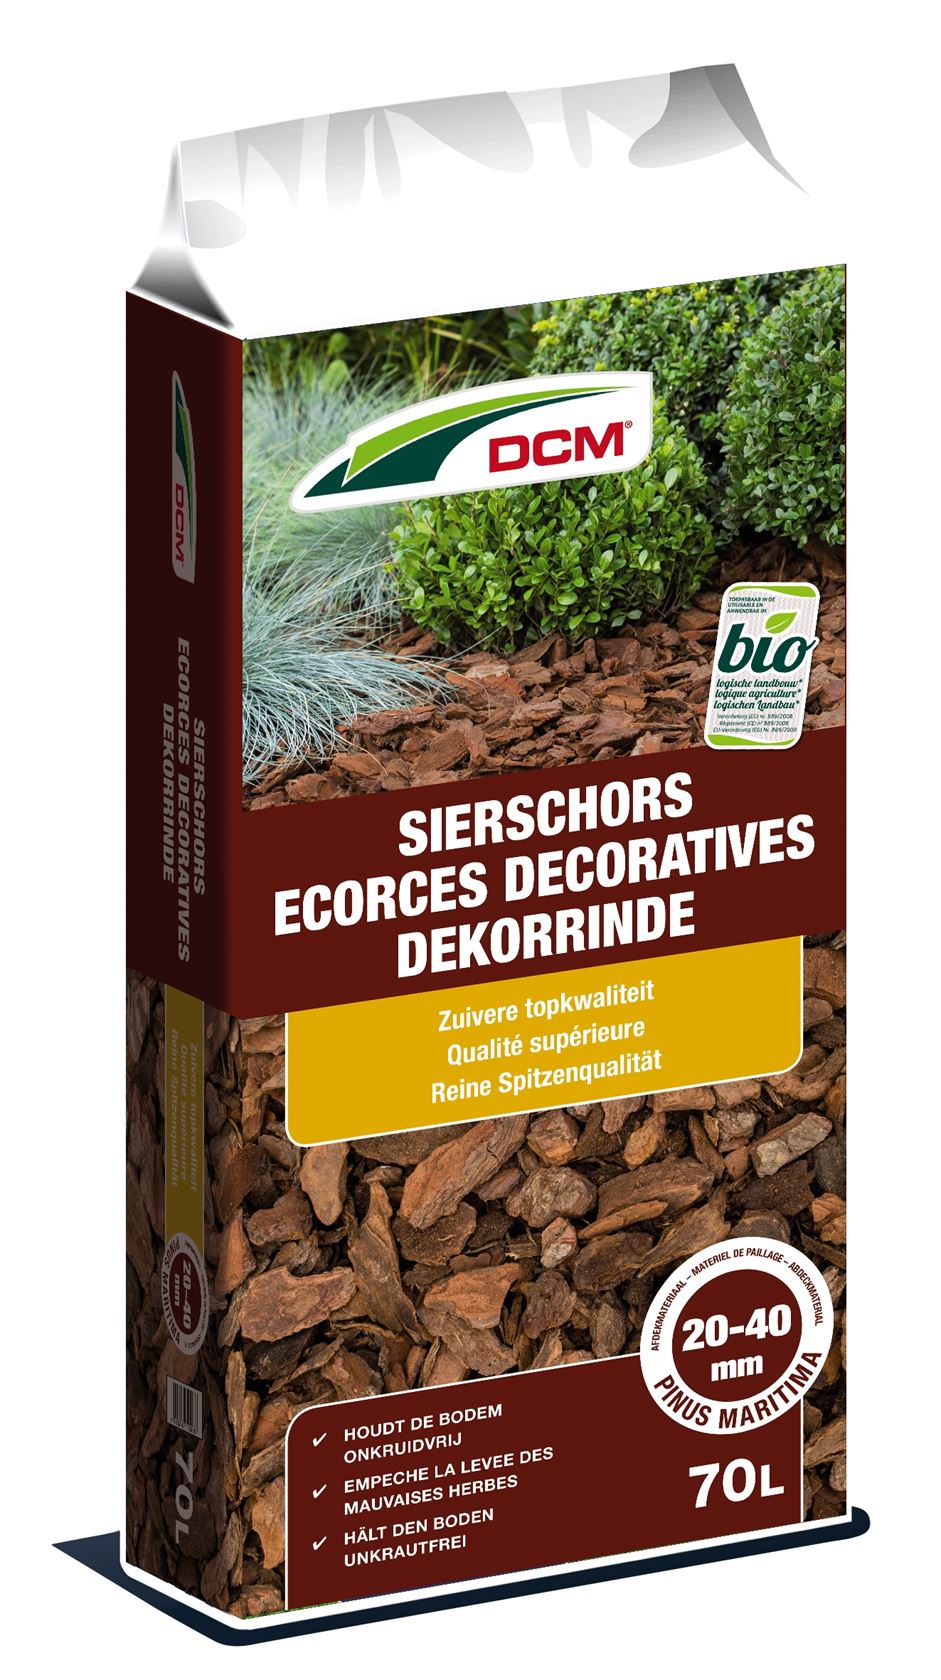 DCM decorative bark 20-40 mm pinus maritima 70L - Bio